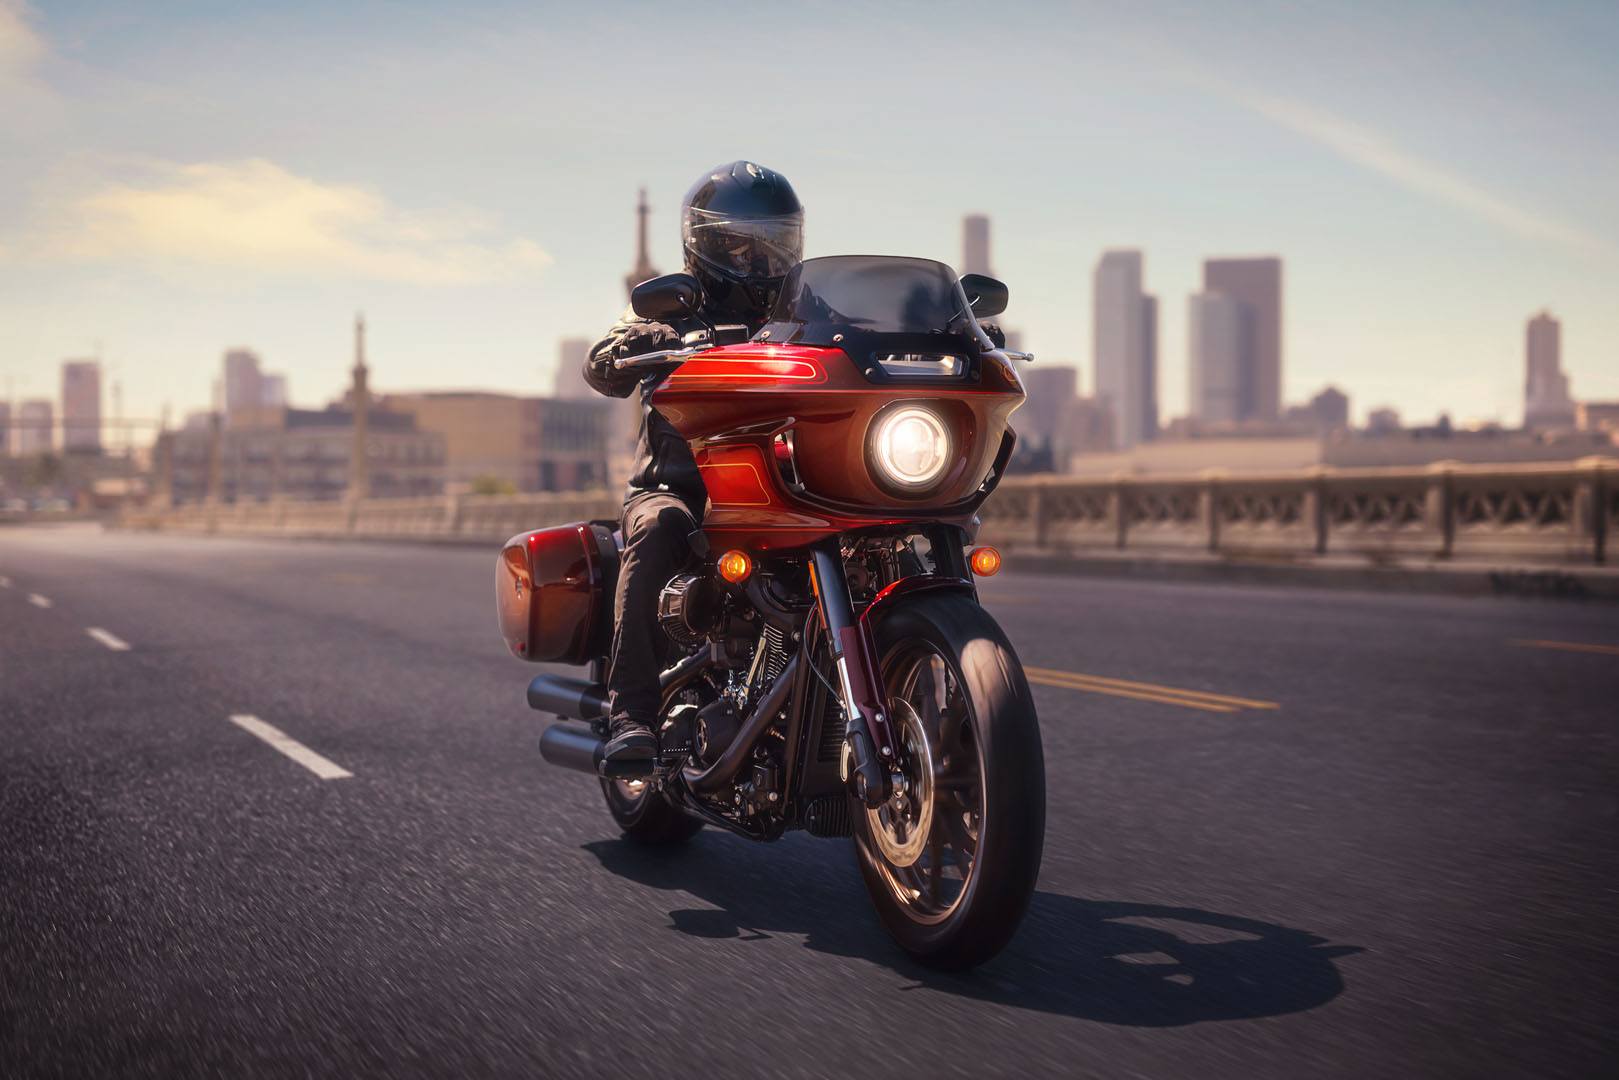 2022 Harley-Davidson Low Rider® El Diablo in Lake Charles, Louisiana - Photo 9